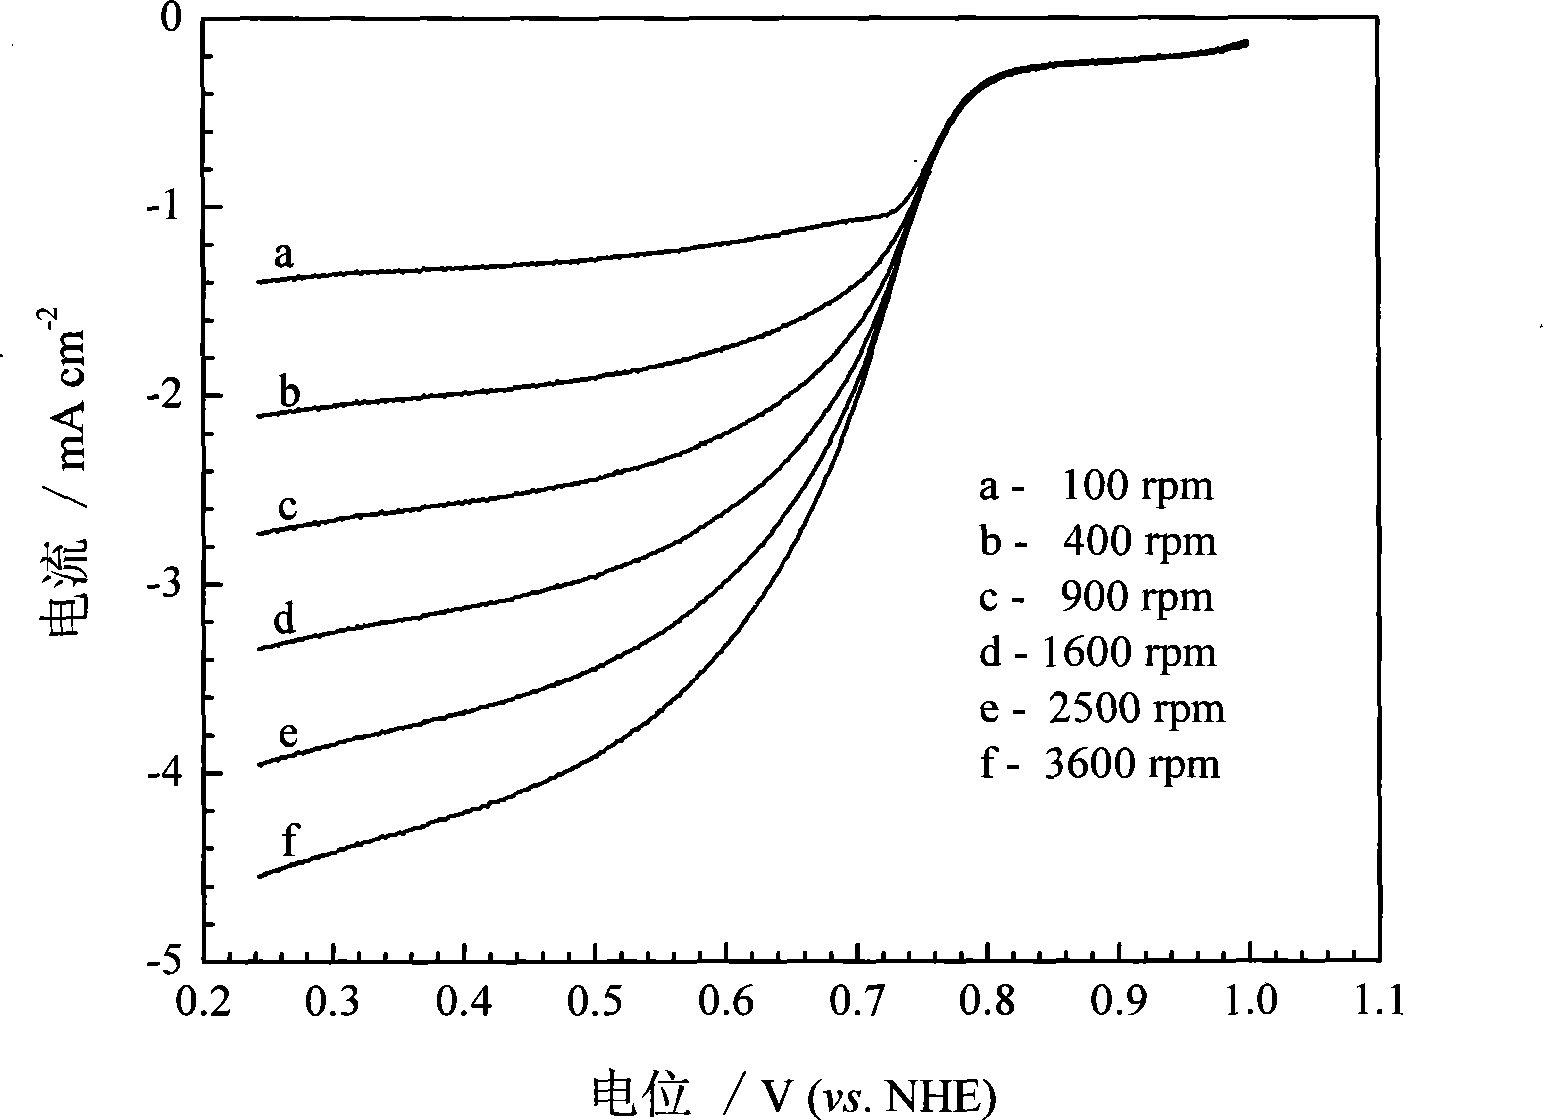 Complex type non noble metal oxygen reduction catalyst